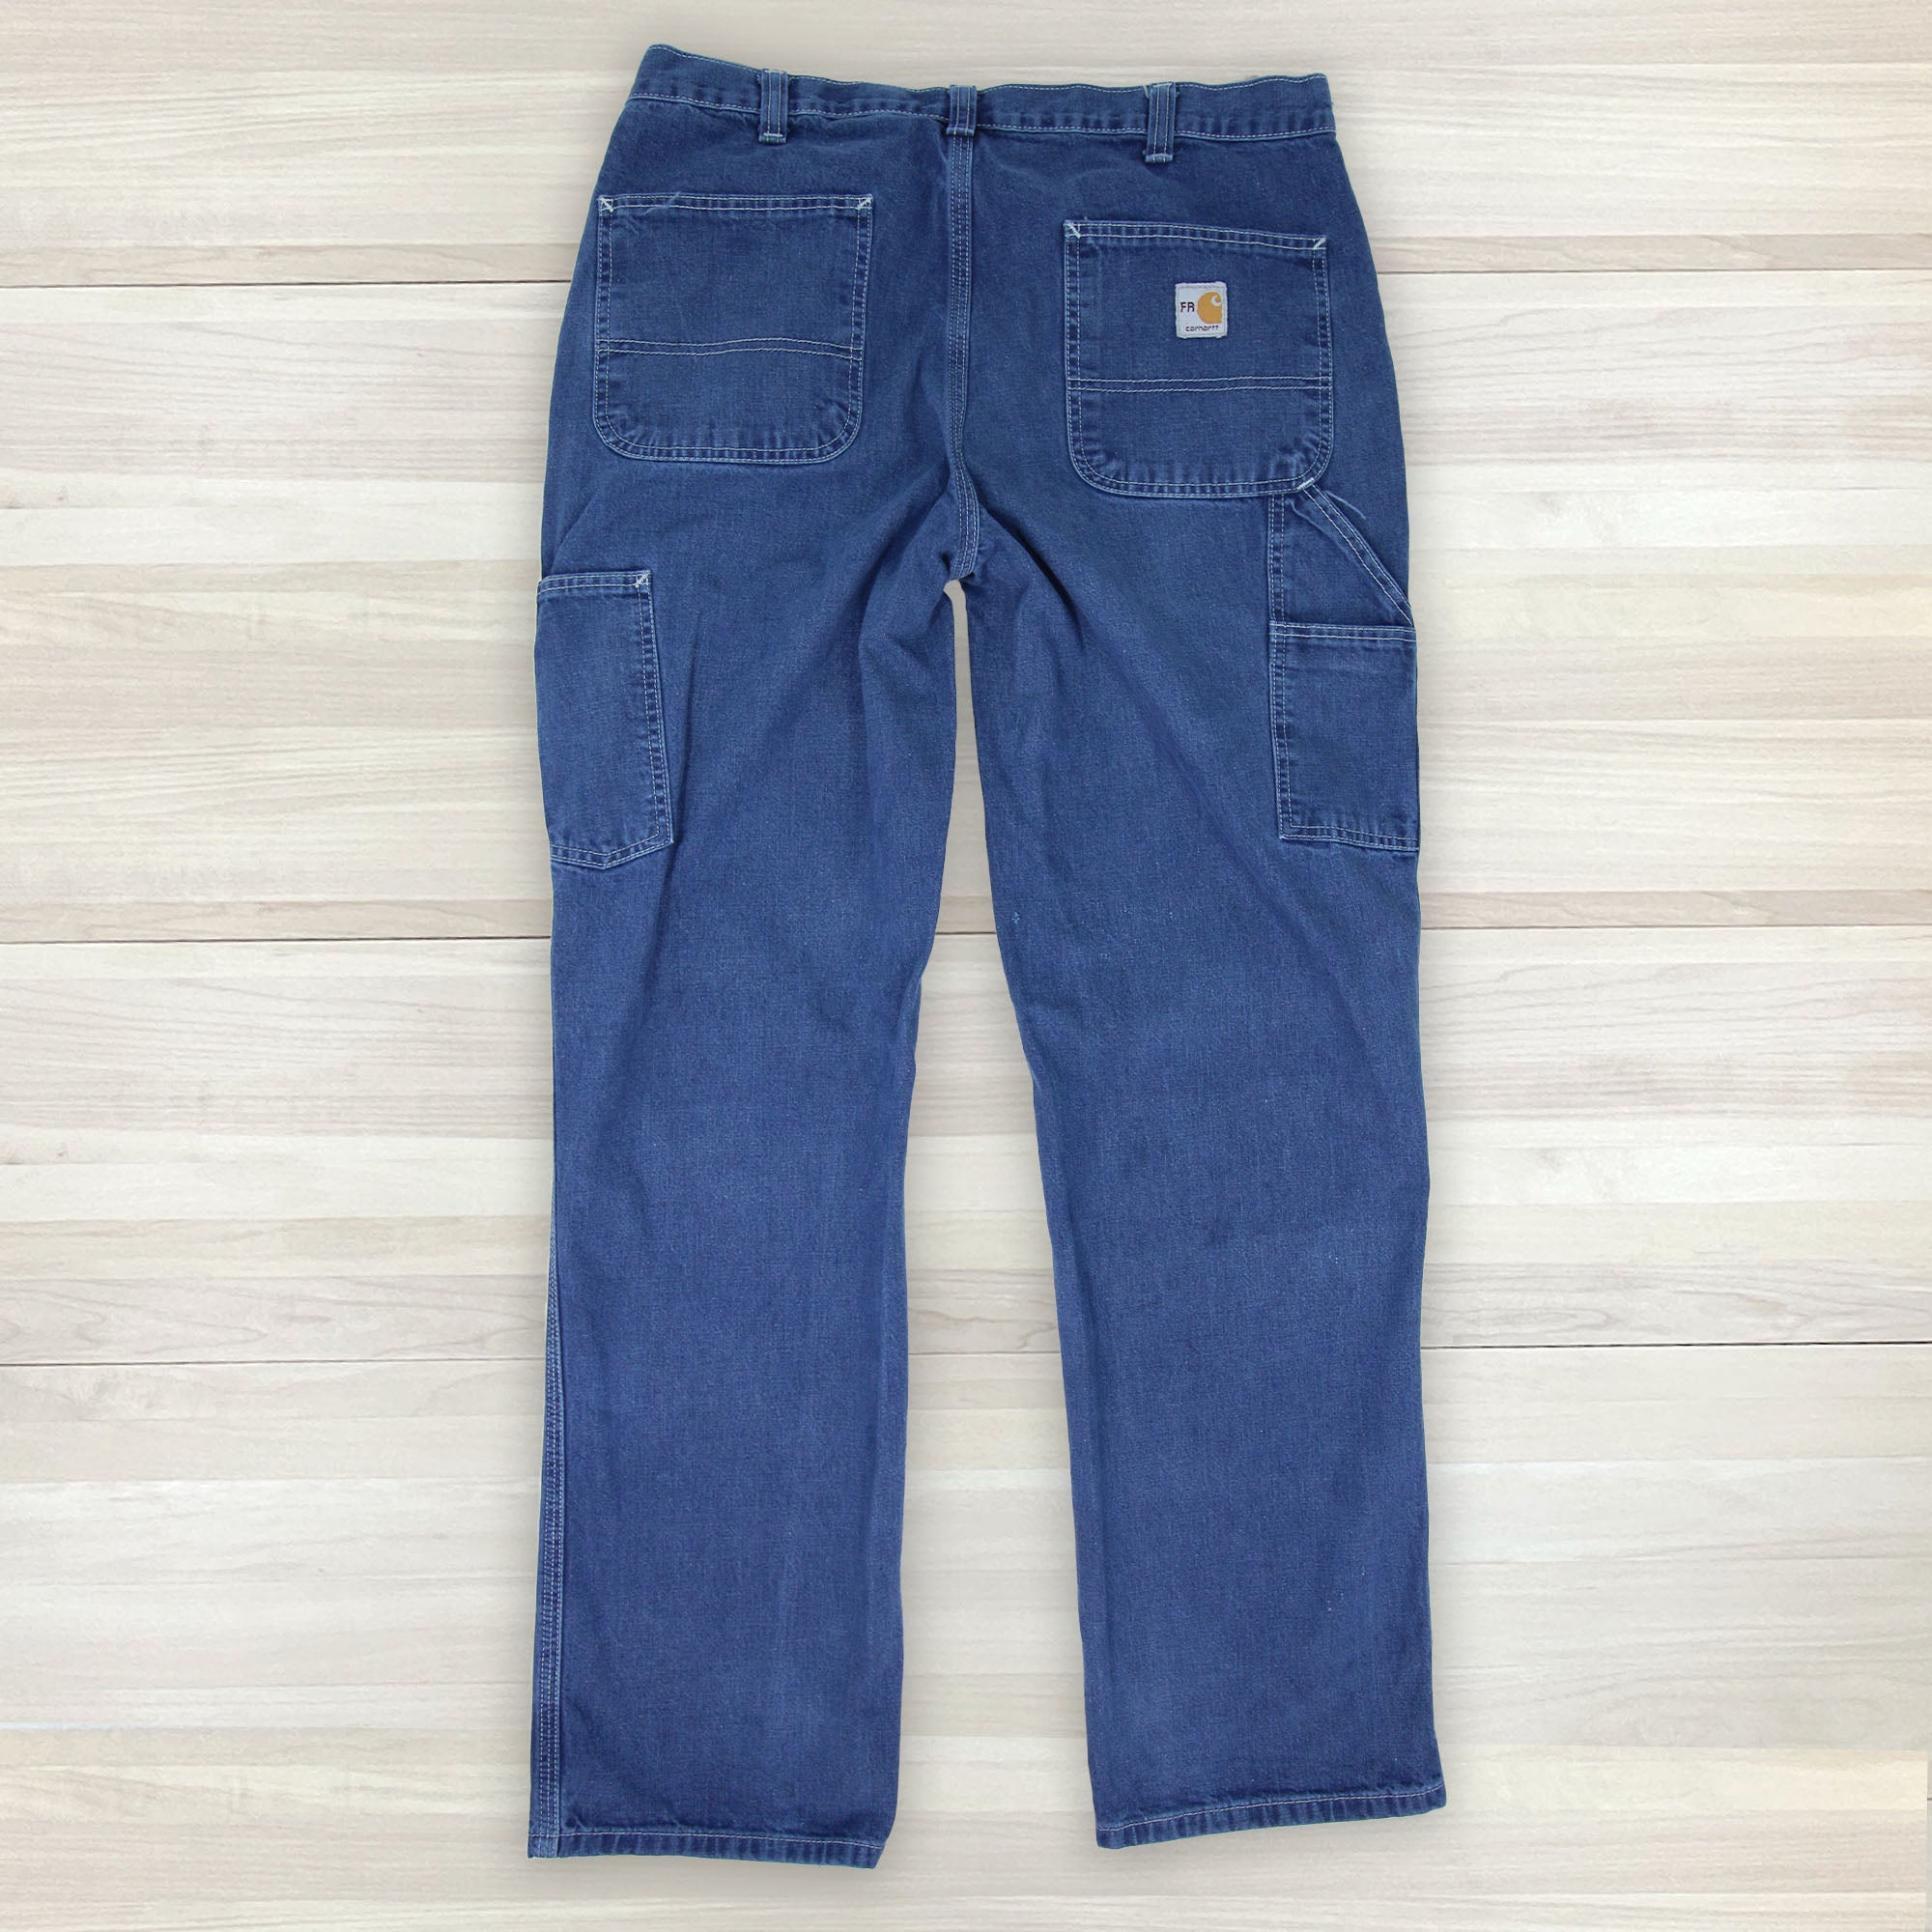 Men's Carhartt Dungaree Fit Carpenter Work Jeans - 36x34 - 0